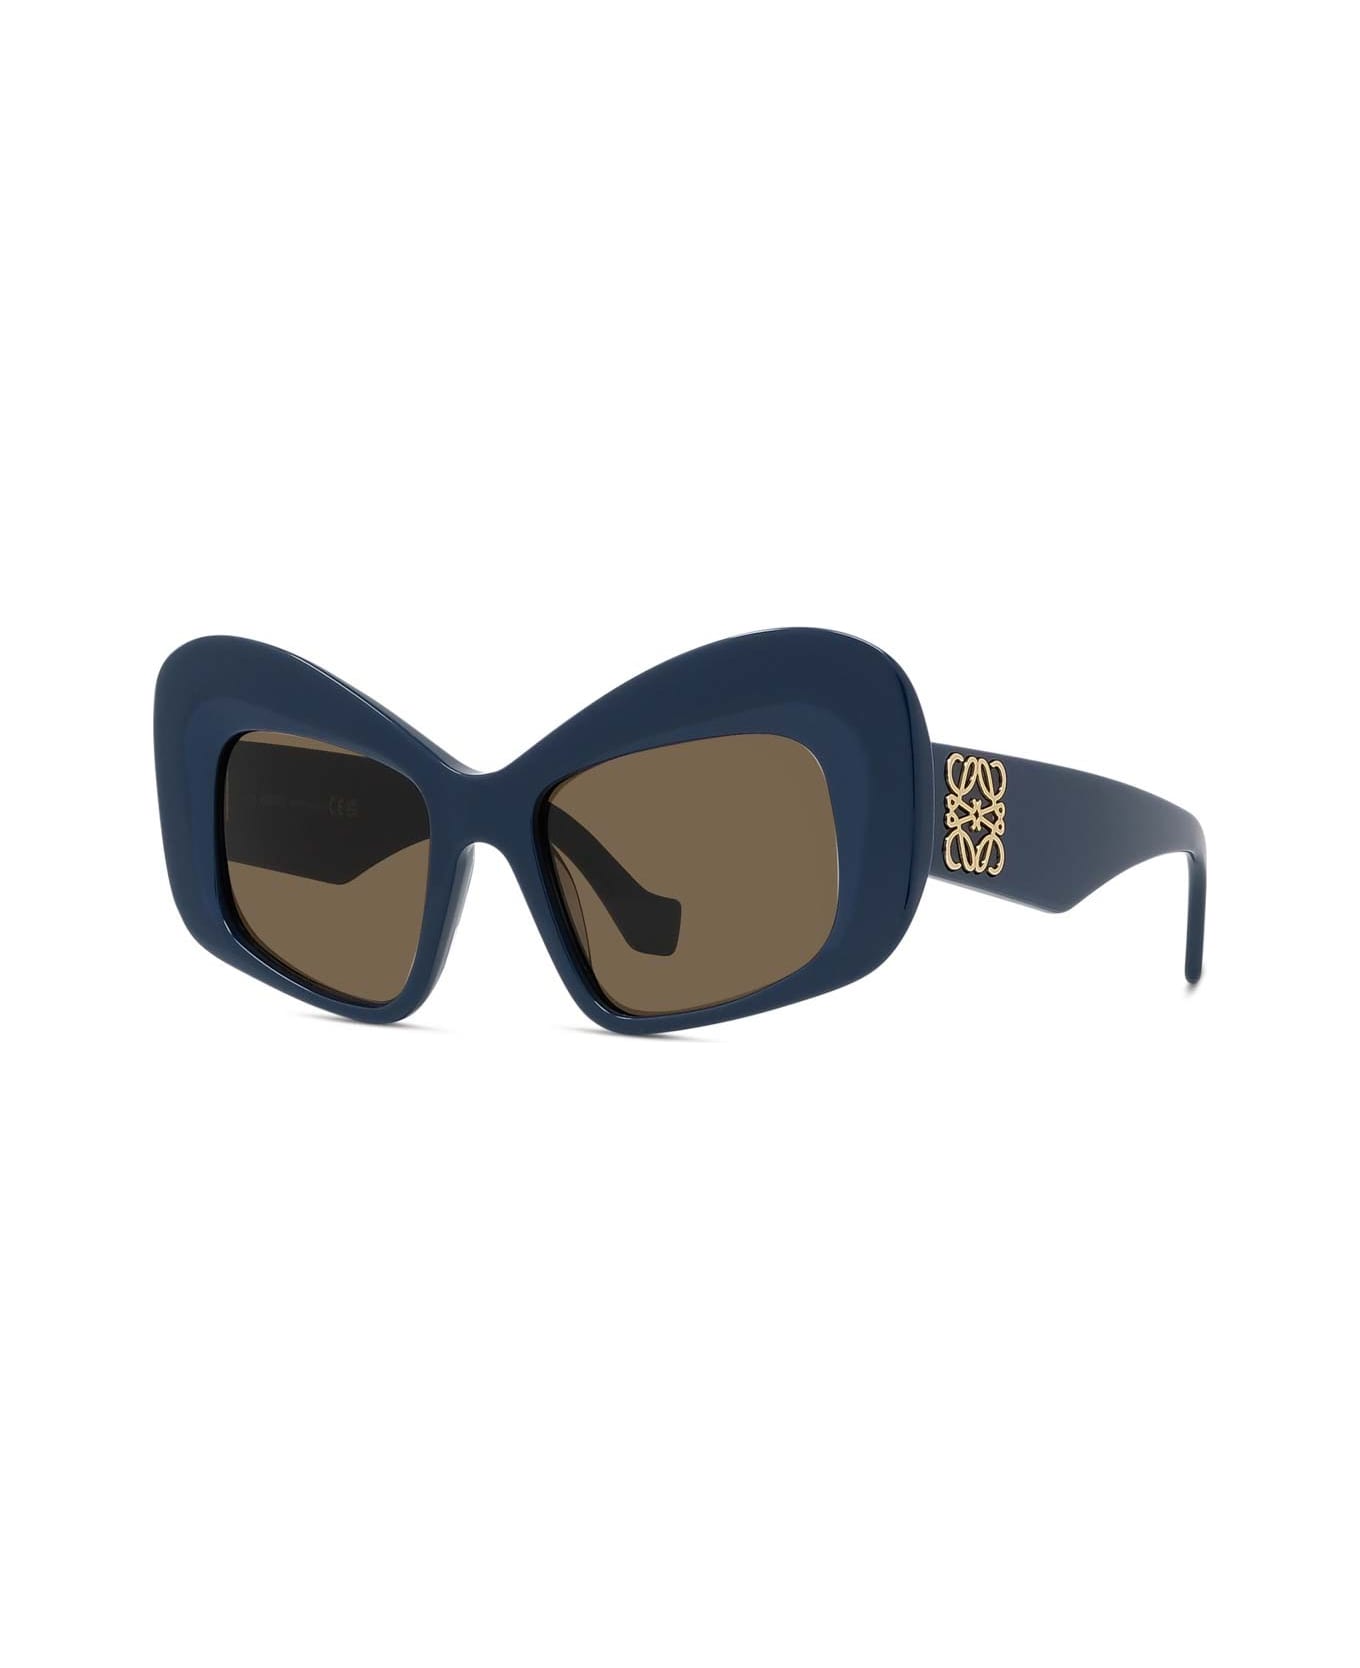 Loewe Sunglasses - Blu/Marrone